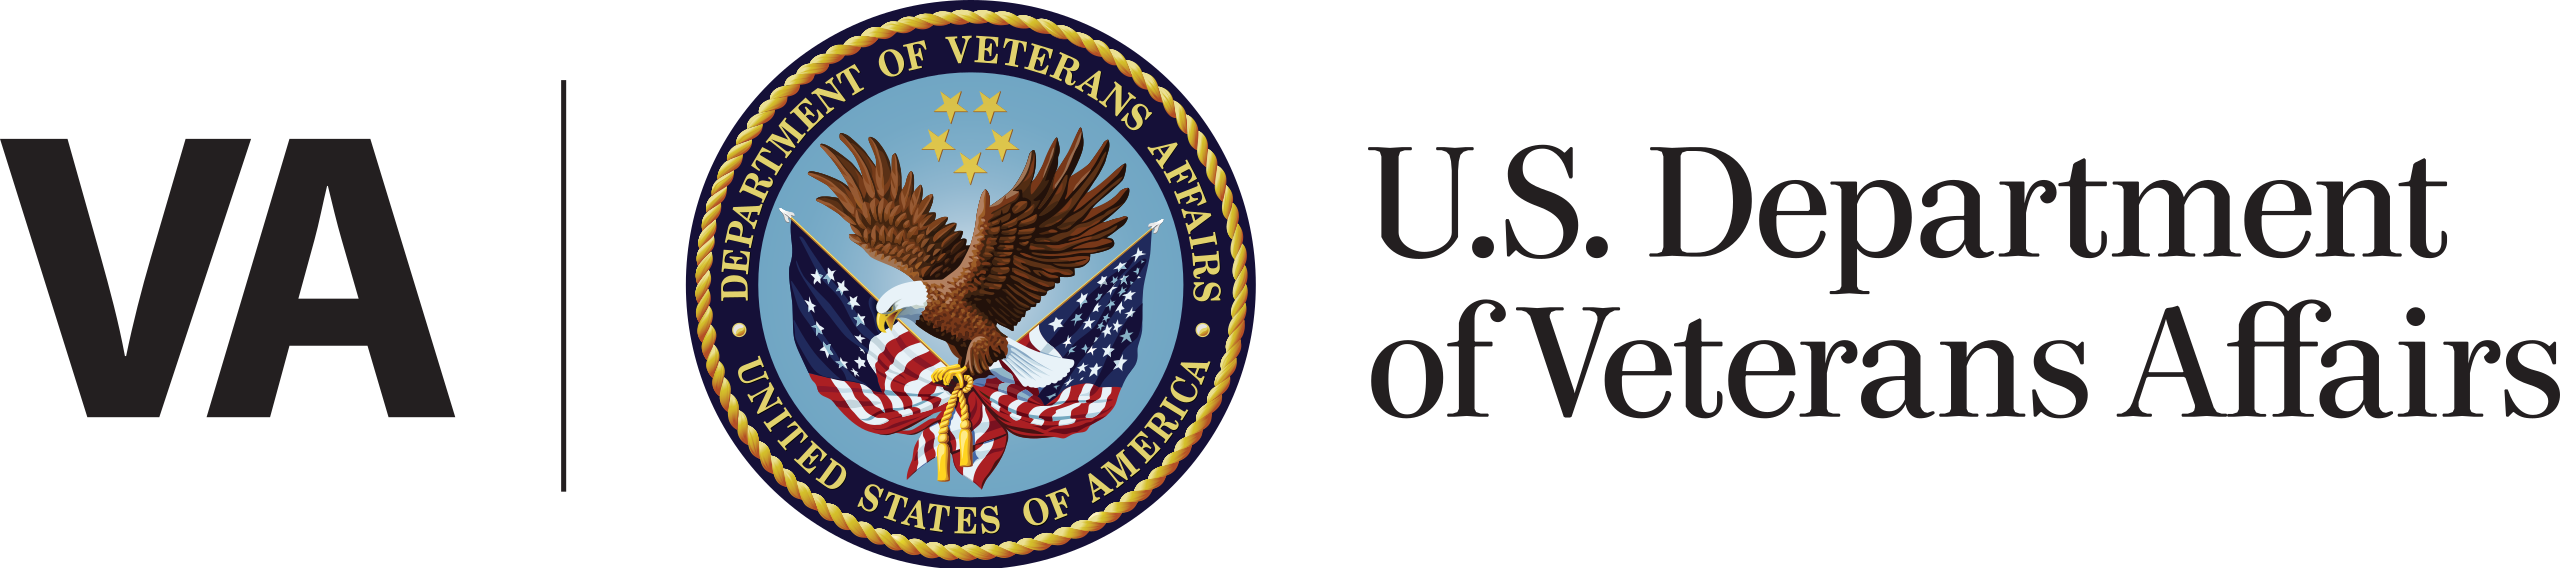 us_department_of_veterans_affairs_logo.svg.png